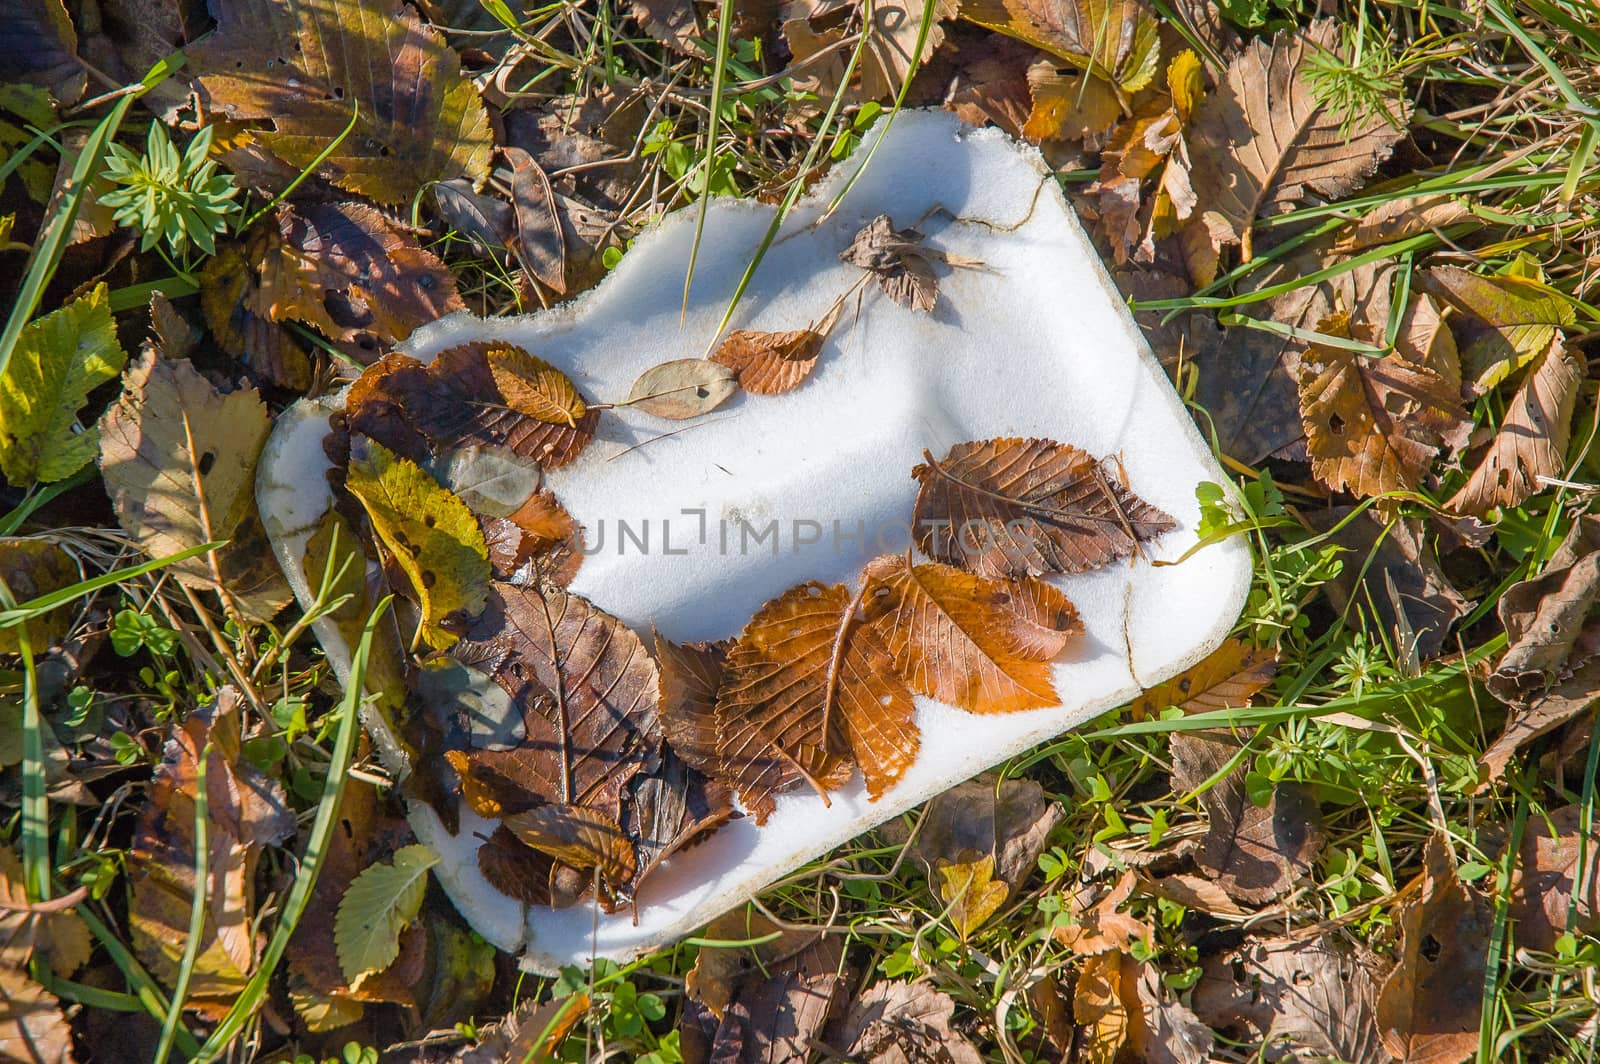 White foam tray left in Nature by MaxalTamor